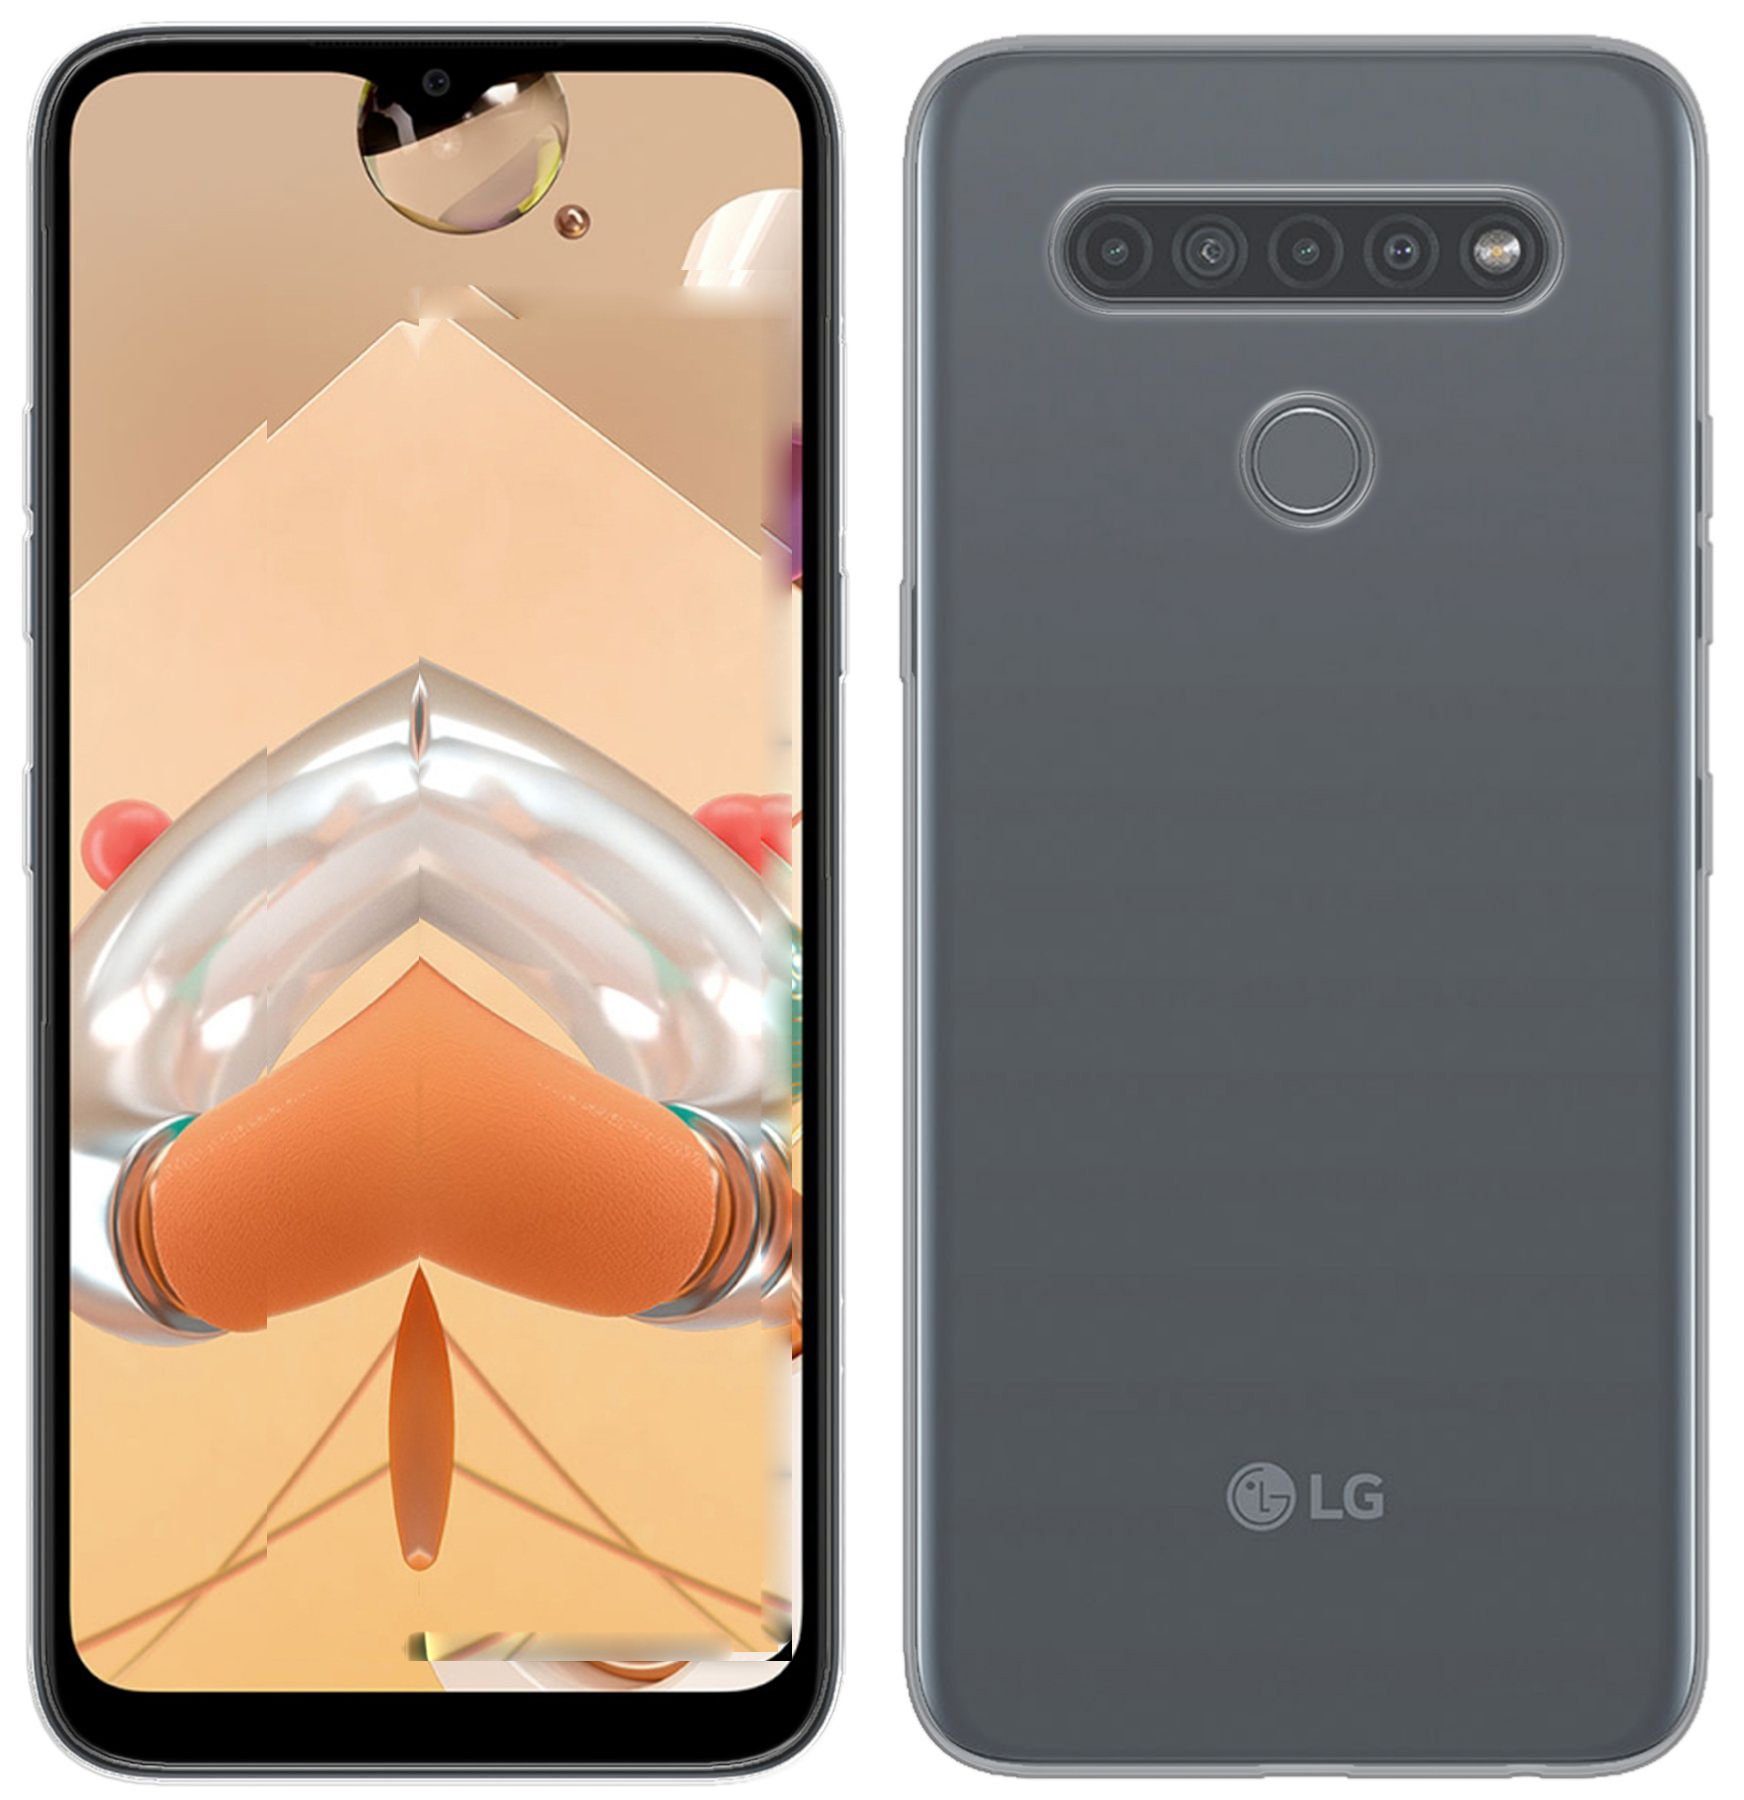 cofi1453 Handyhülle »Silikon Hülle Basic für LG K51S«, Case Cover  Schutzhülle Bumper online kaufen | OTTO